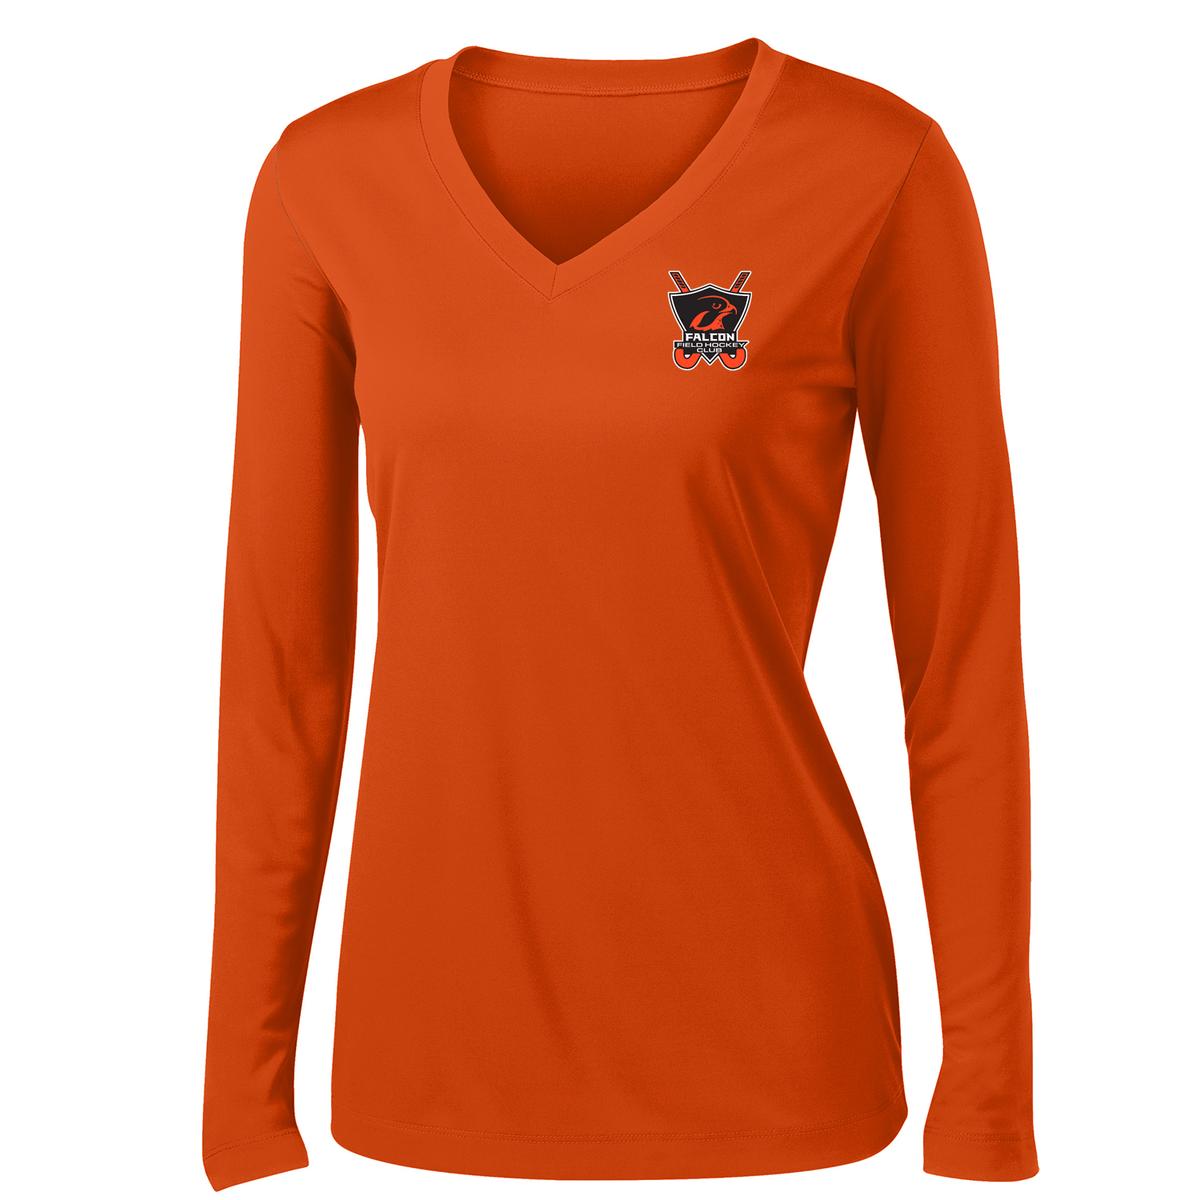 Falcons Field Hockey Club Women's Long Sleeve Performance Shirt